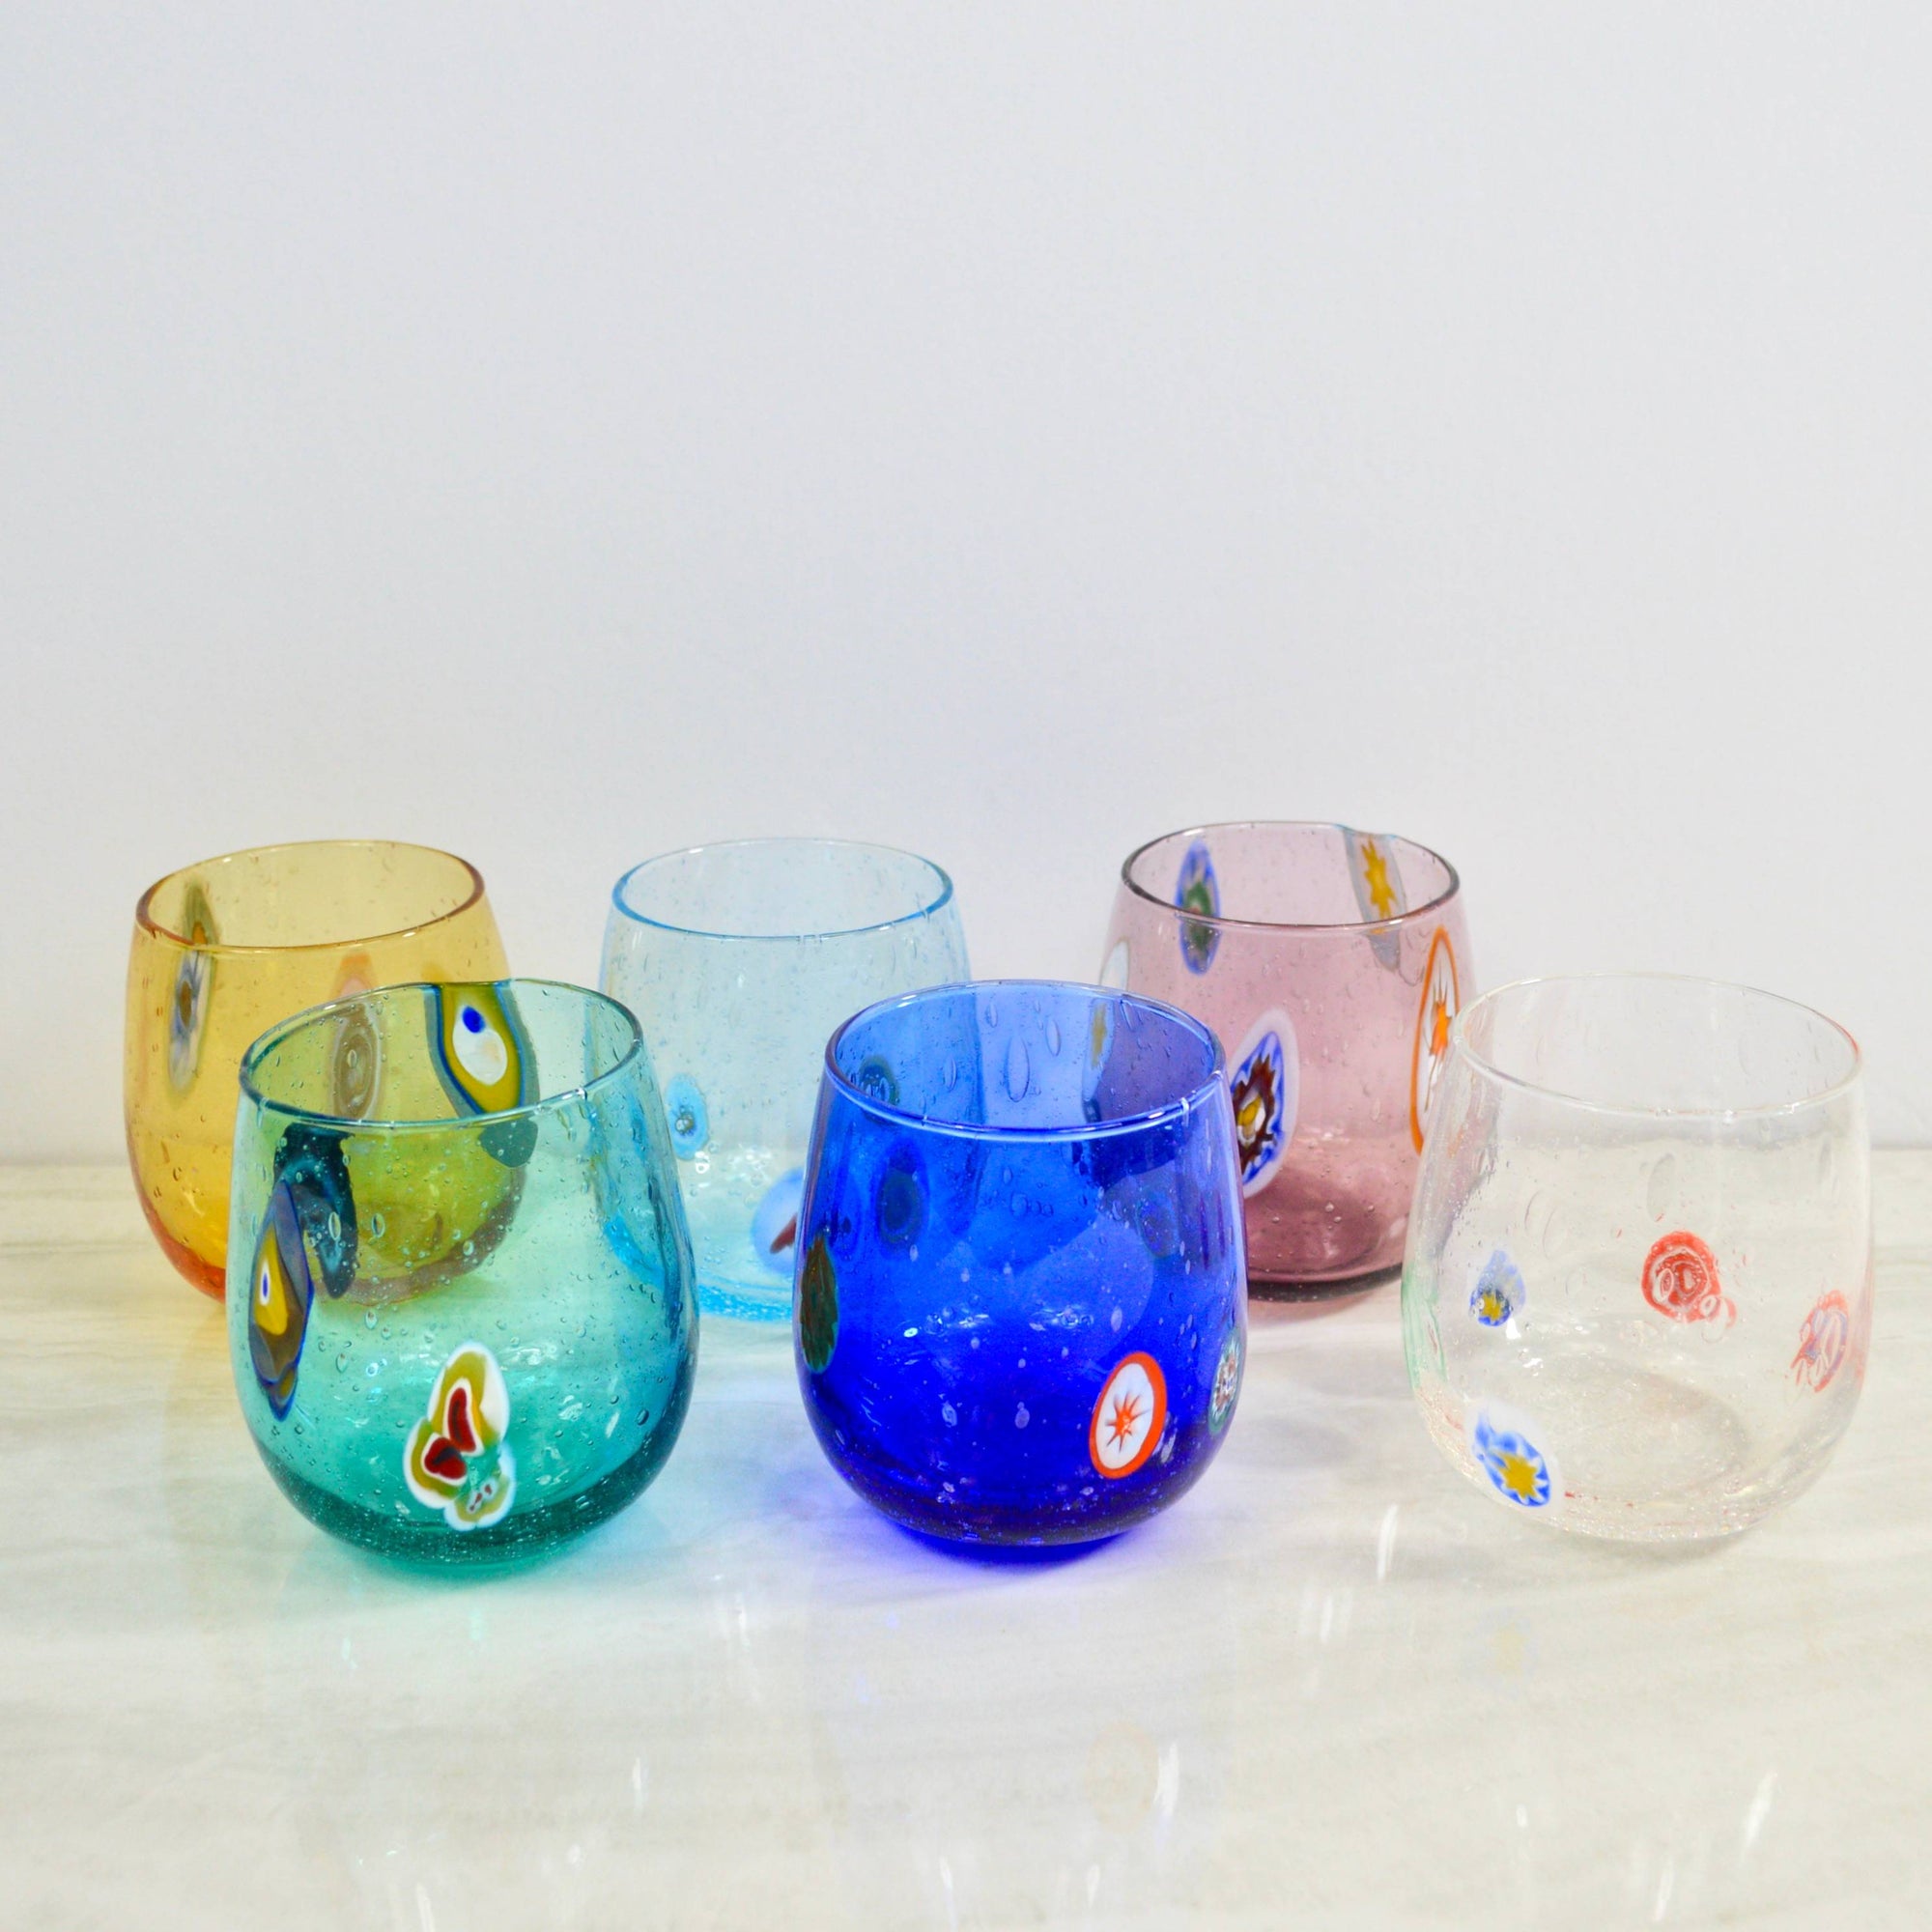 Goto Venetian Wine Glasses - Set of 6, Handpainted Wine Tumblers,  Stemless, Italian